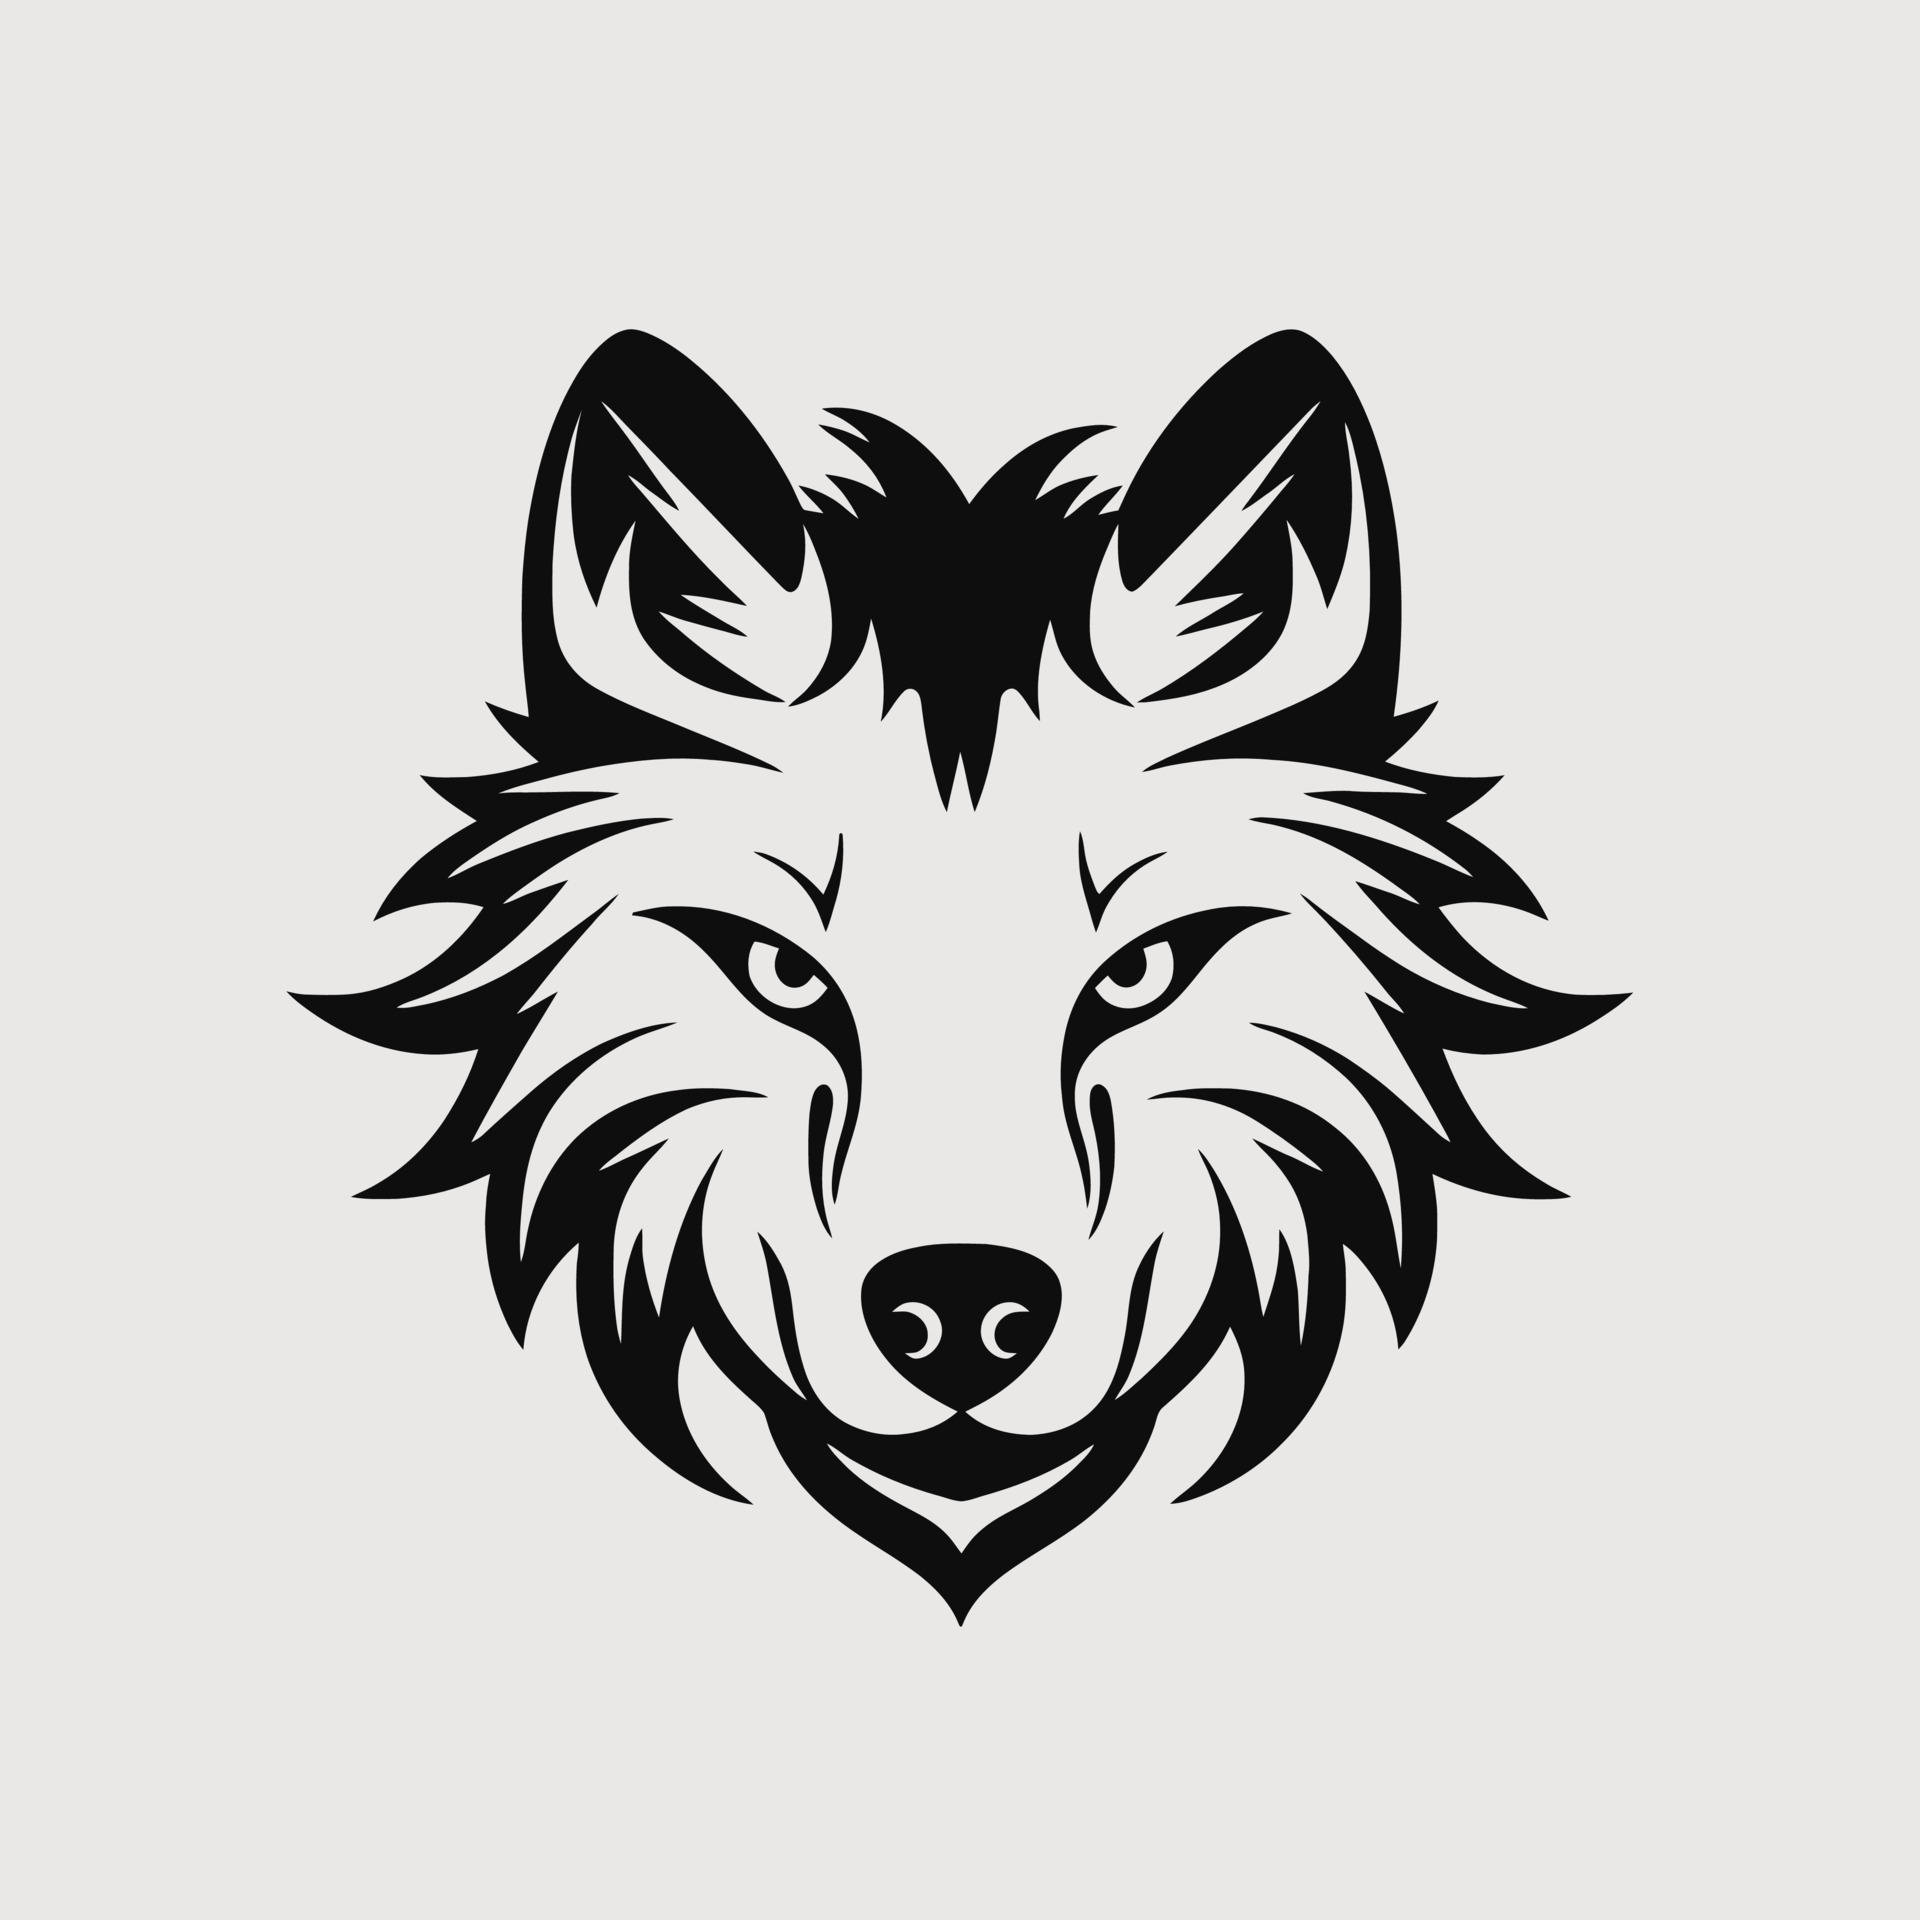 Wolf head logo vector - Animal Brand Symbol 24119025 Vector Art at Vecteezy